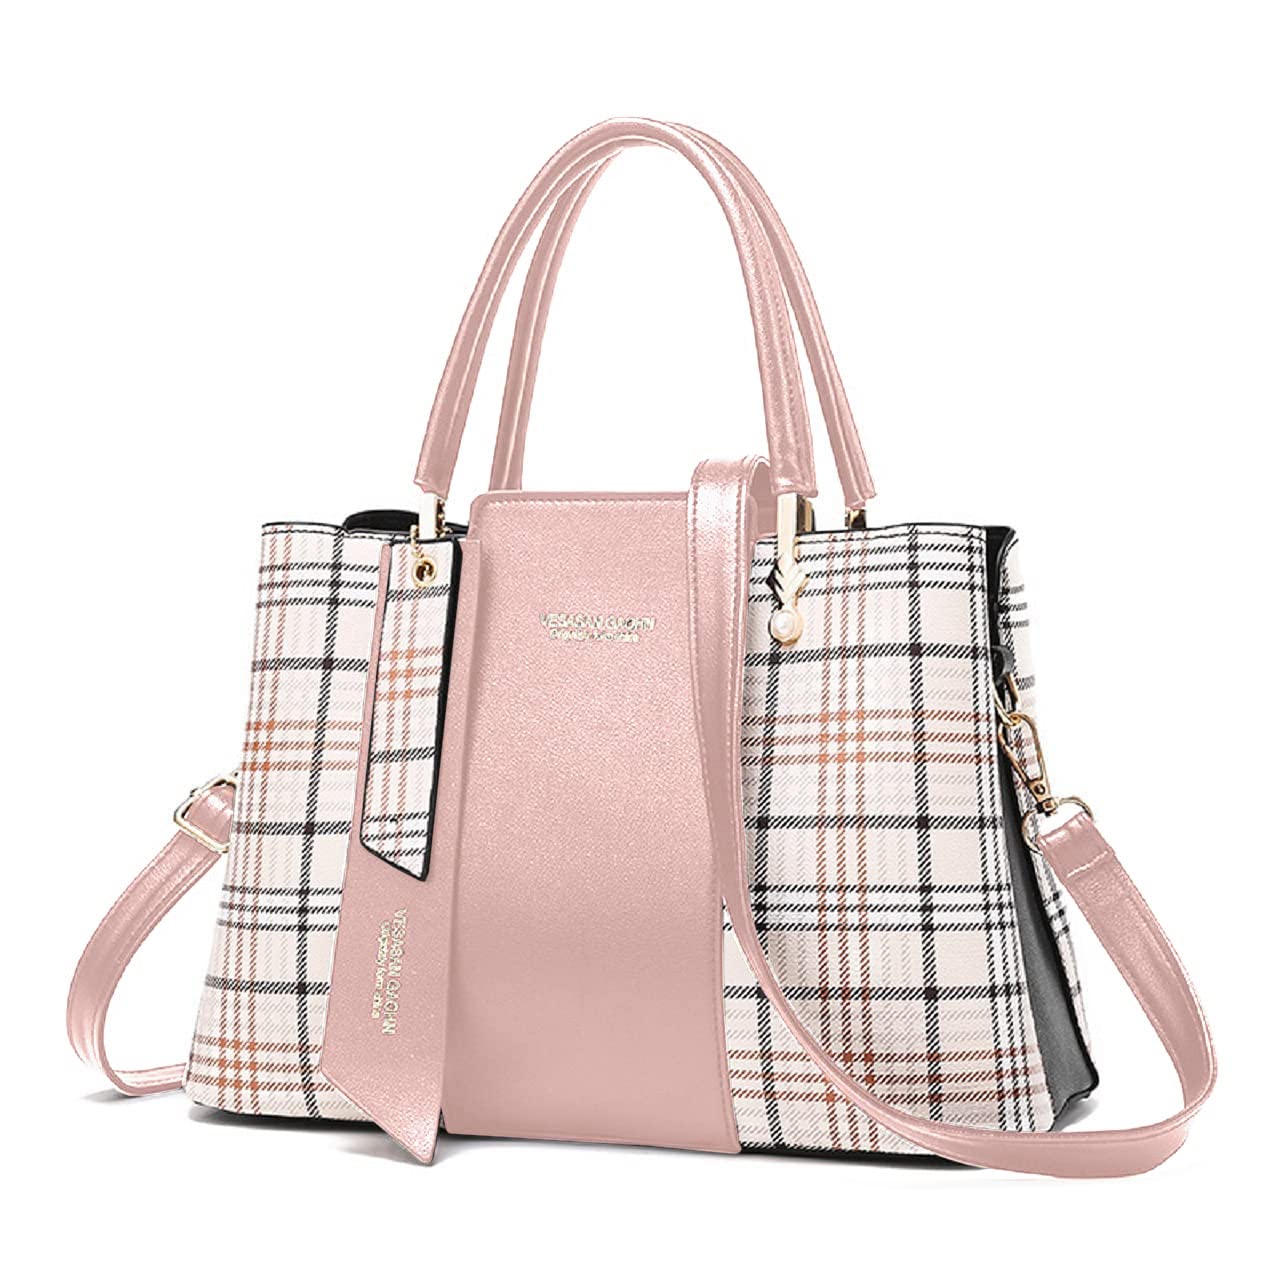 Brightrust Women's Handbag, 2-Way Shoulder Bag, Crossbody Design, Plaid, PU Leather